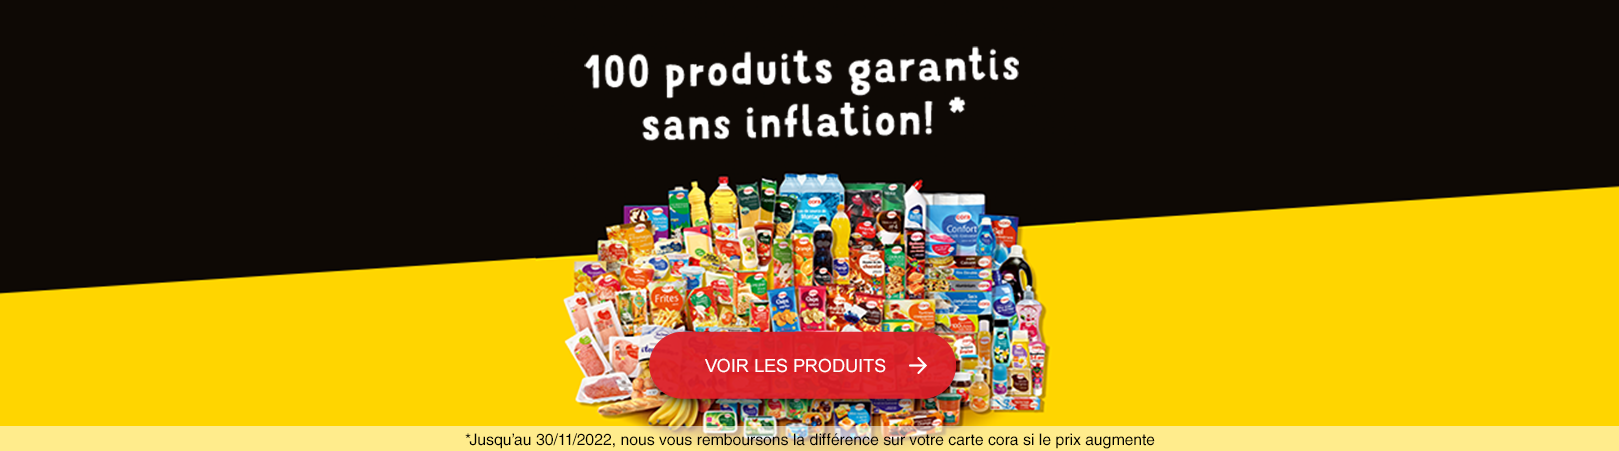 Garantis sans inflation